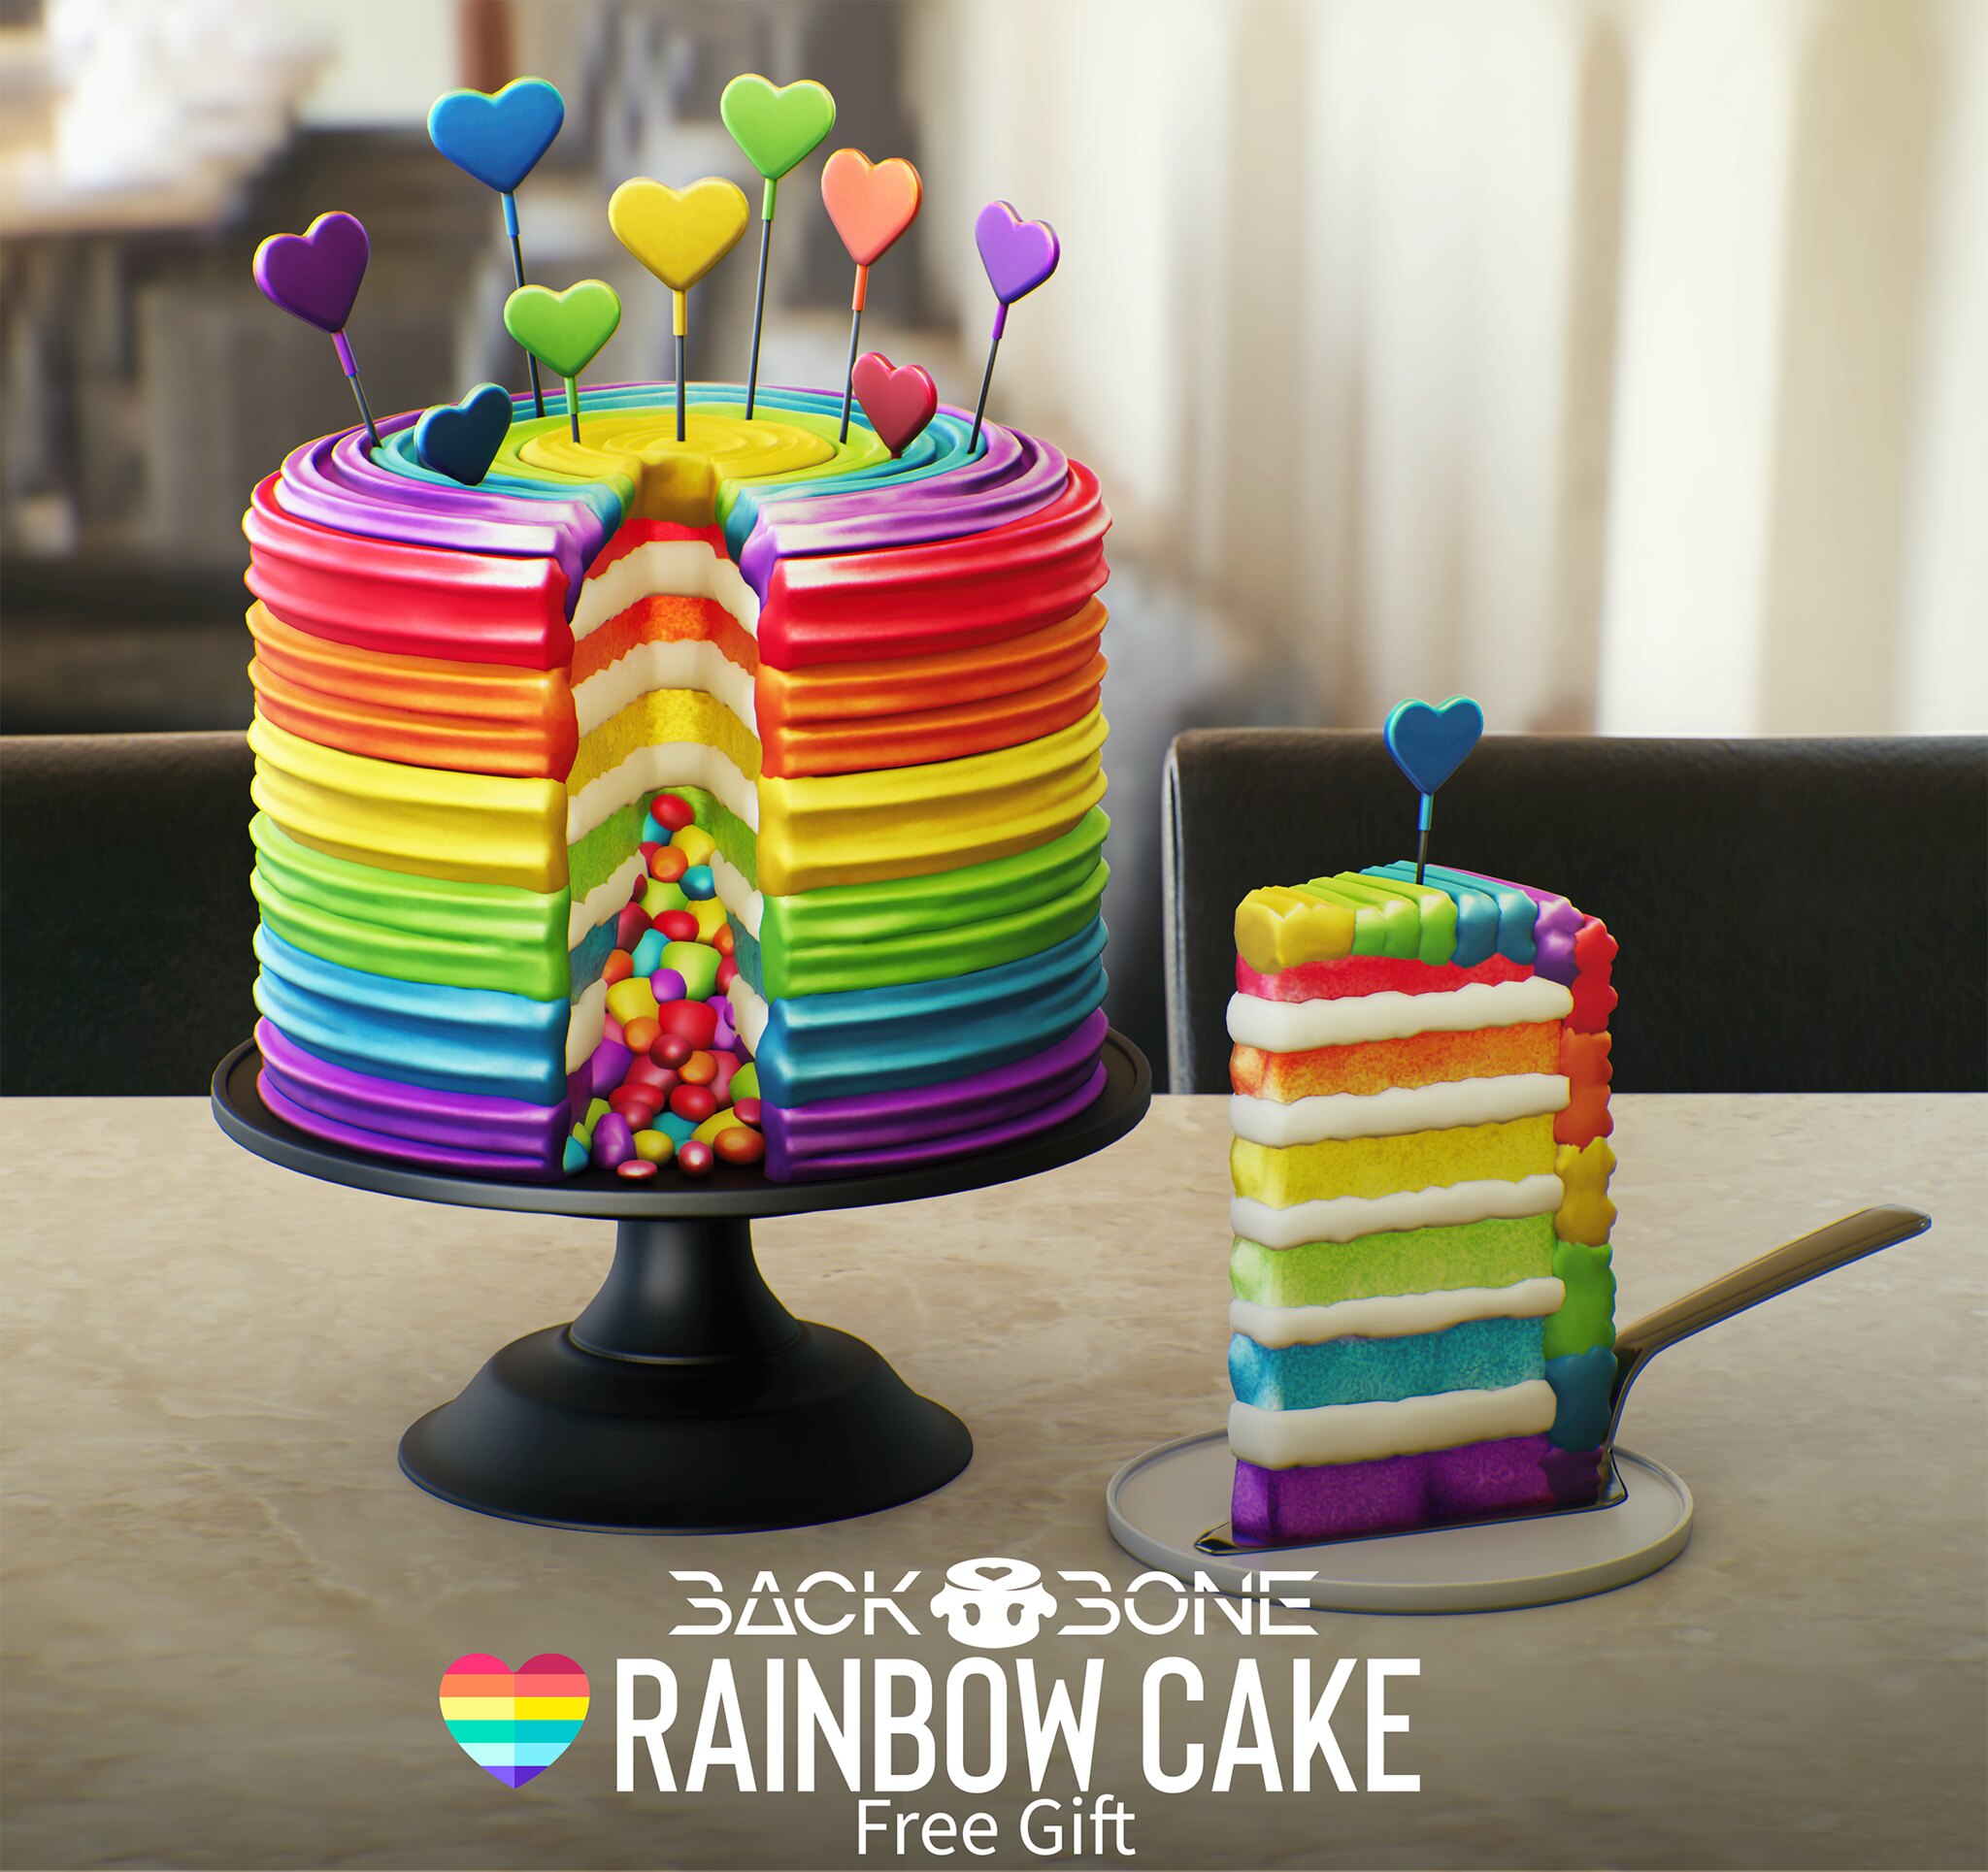 BackBone – Rainbow Cake